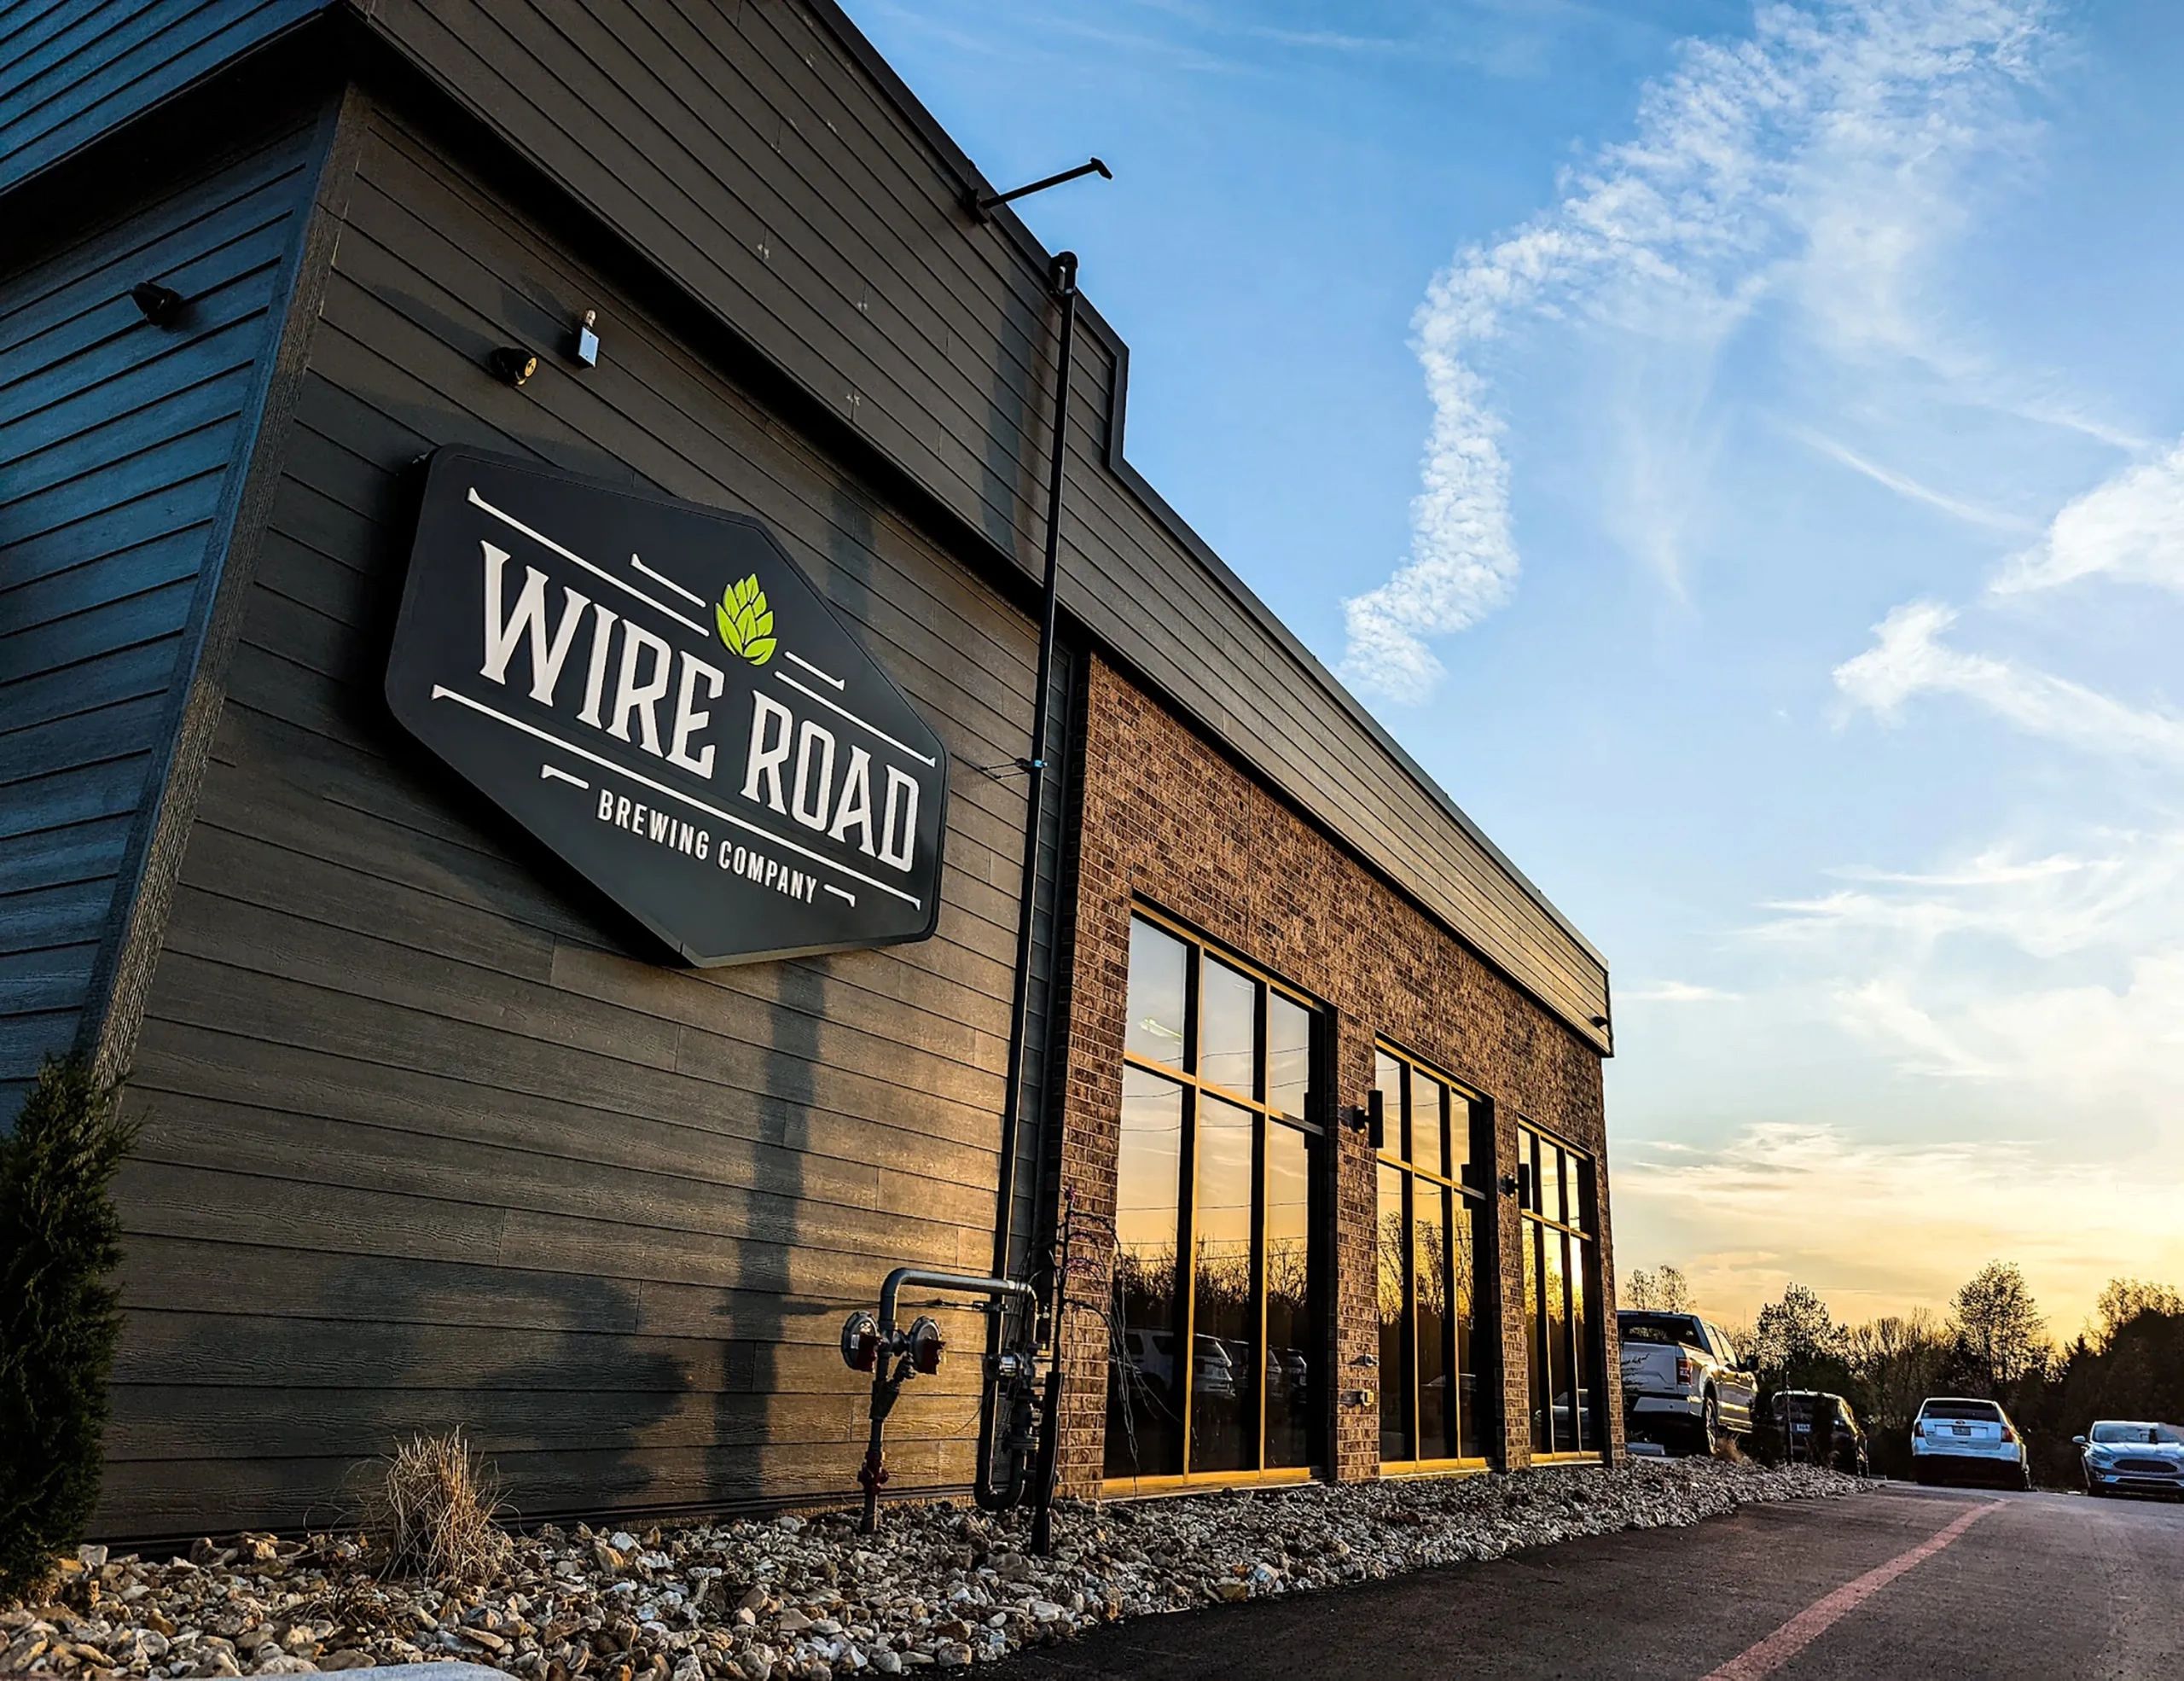 Wire Road Brewing Company - Brewery - Battlefield, Missouri